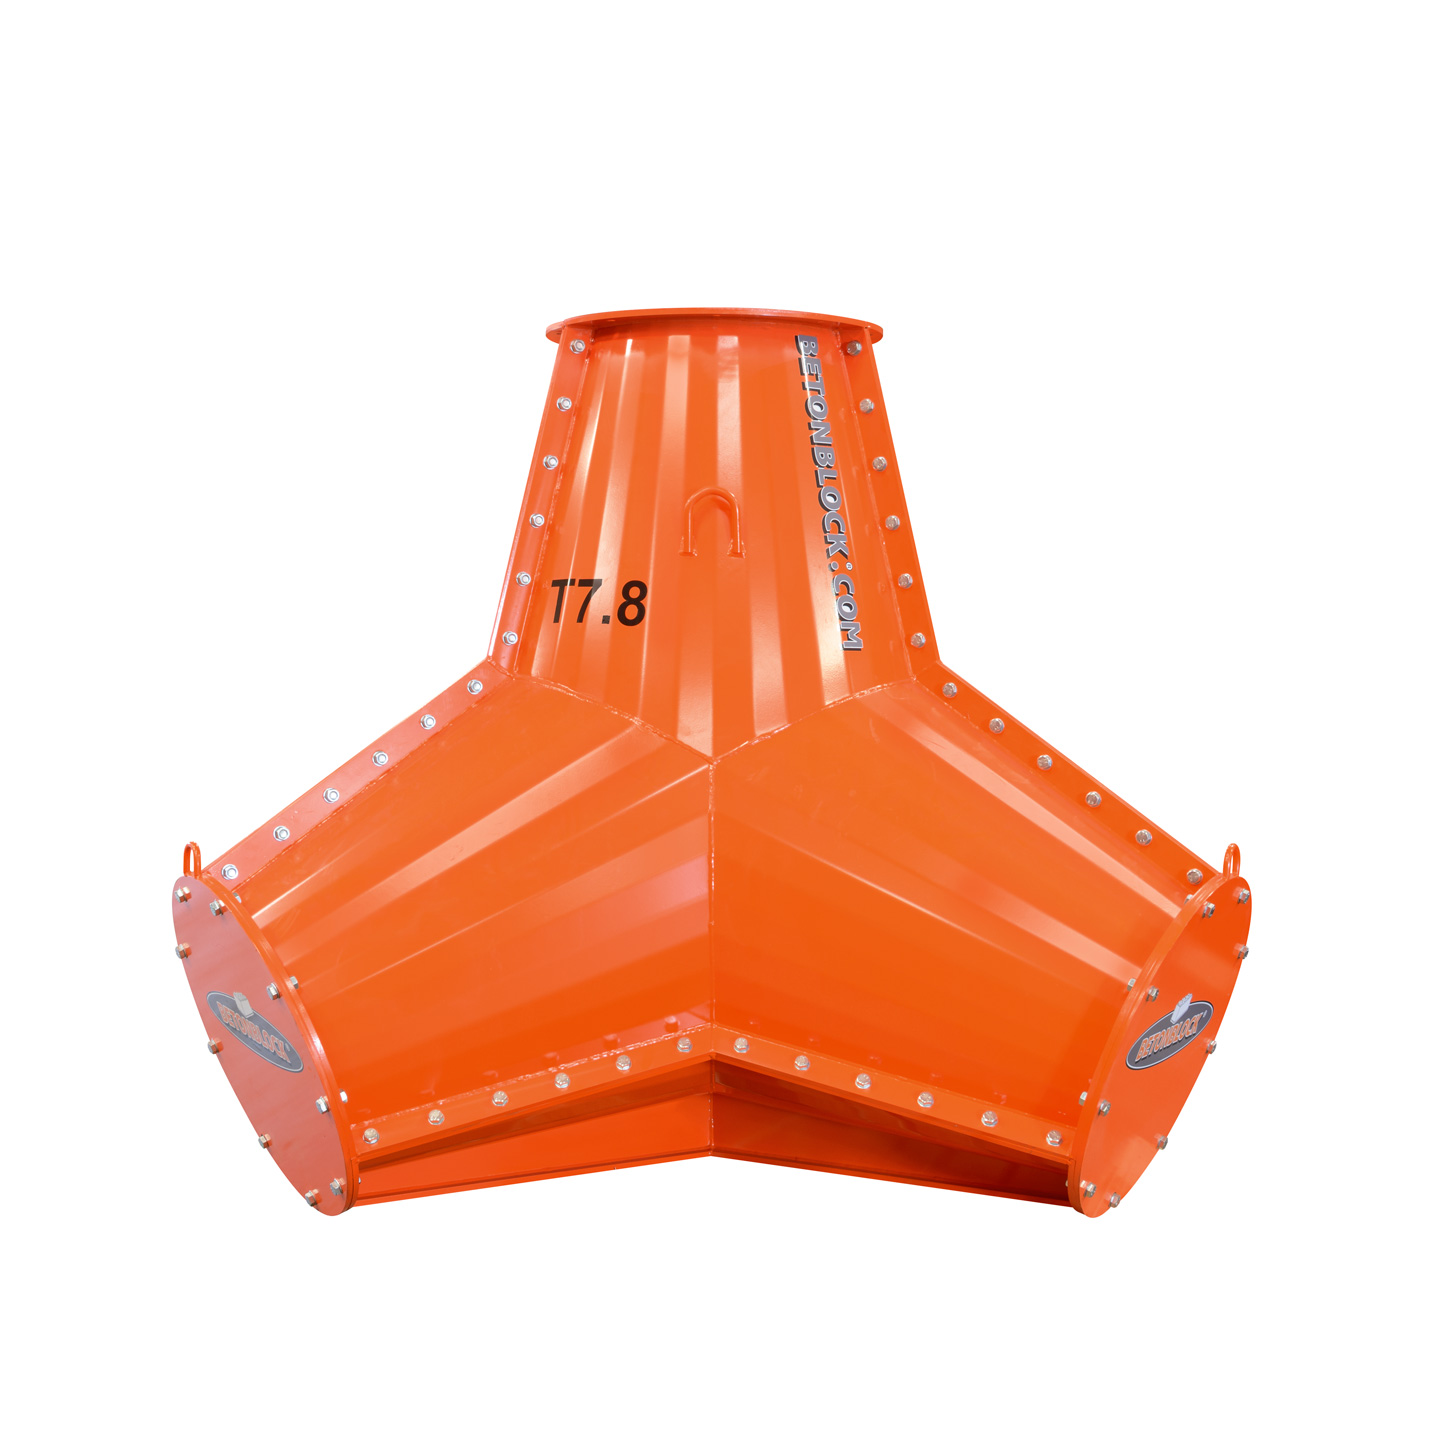 Orange steel tetrapod mold for making large concrete tetrapods of 7800 kg